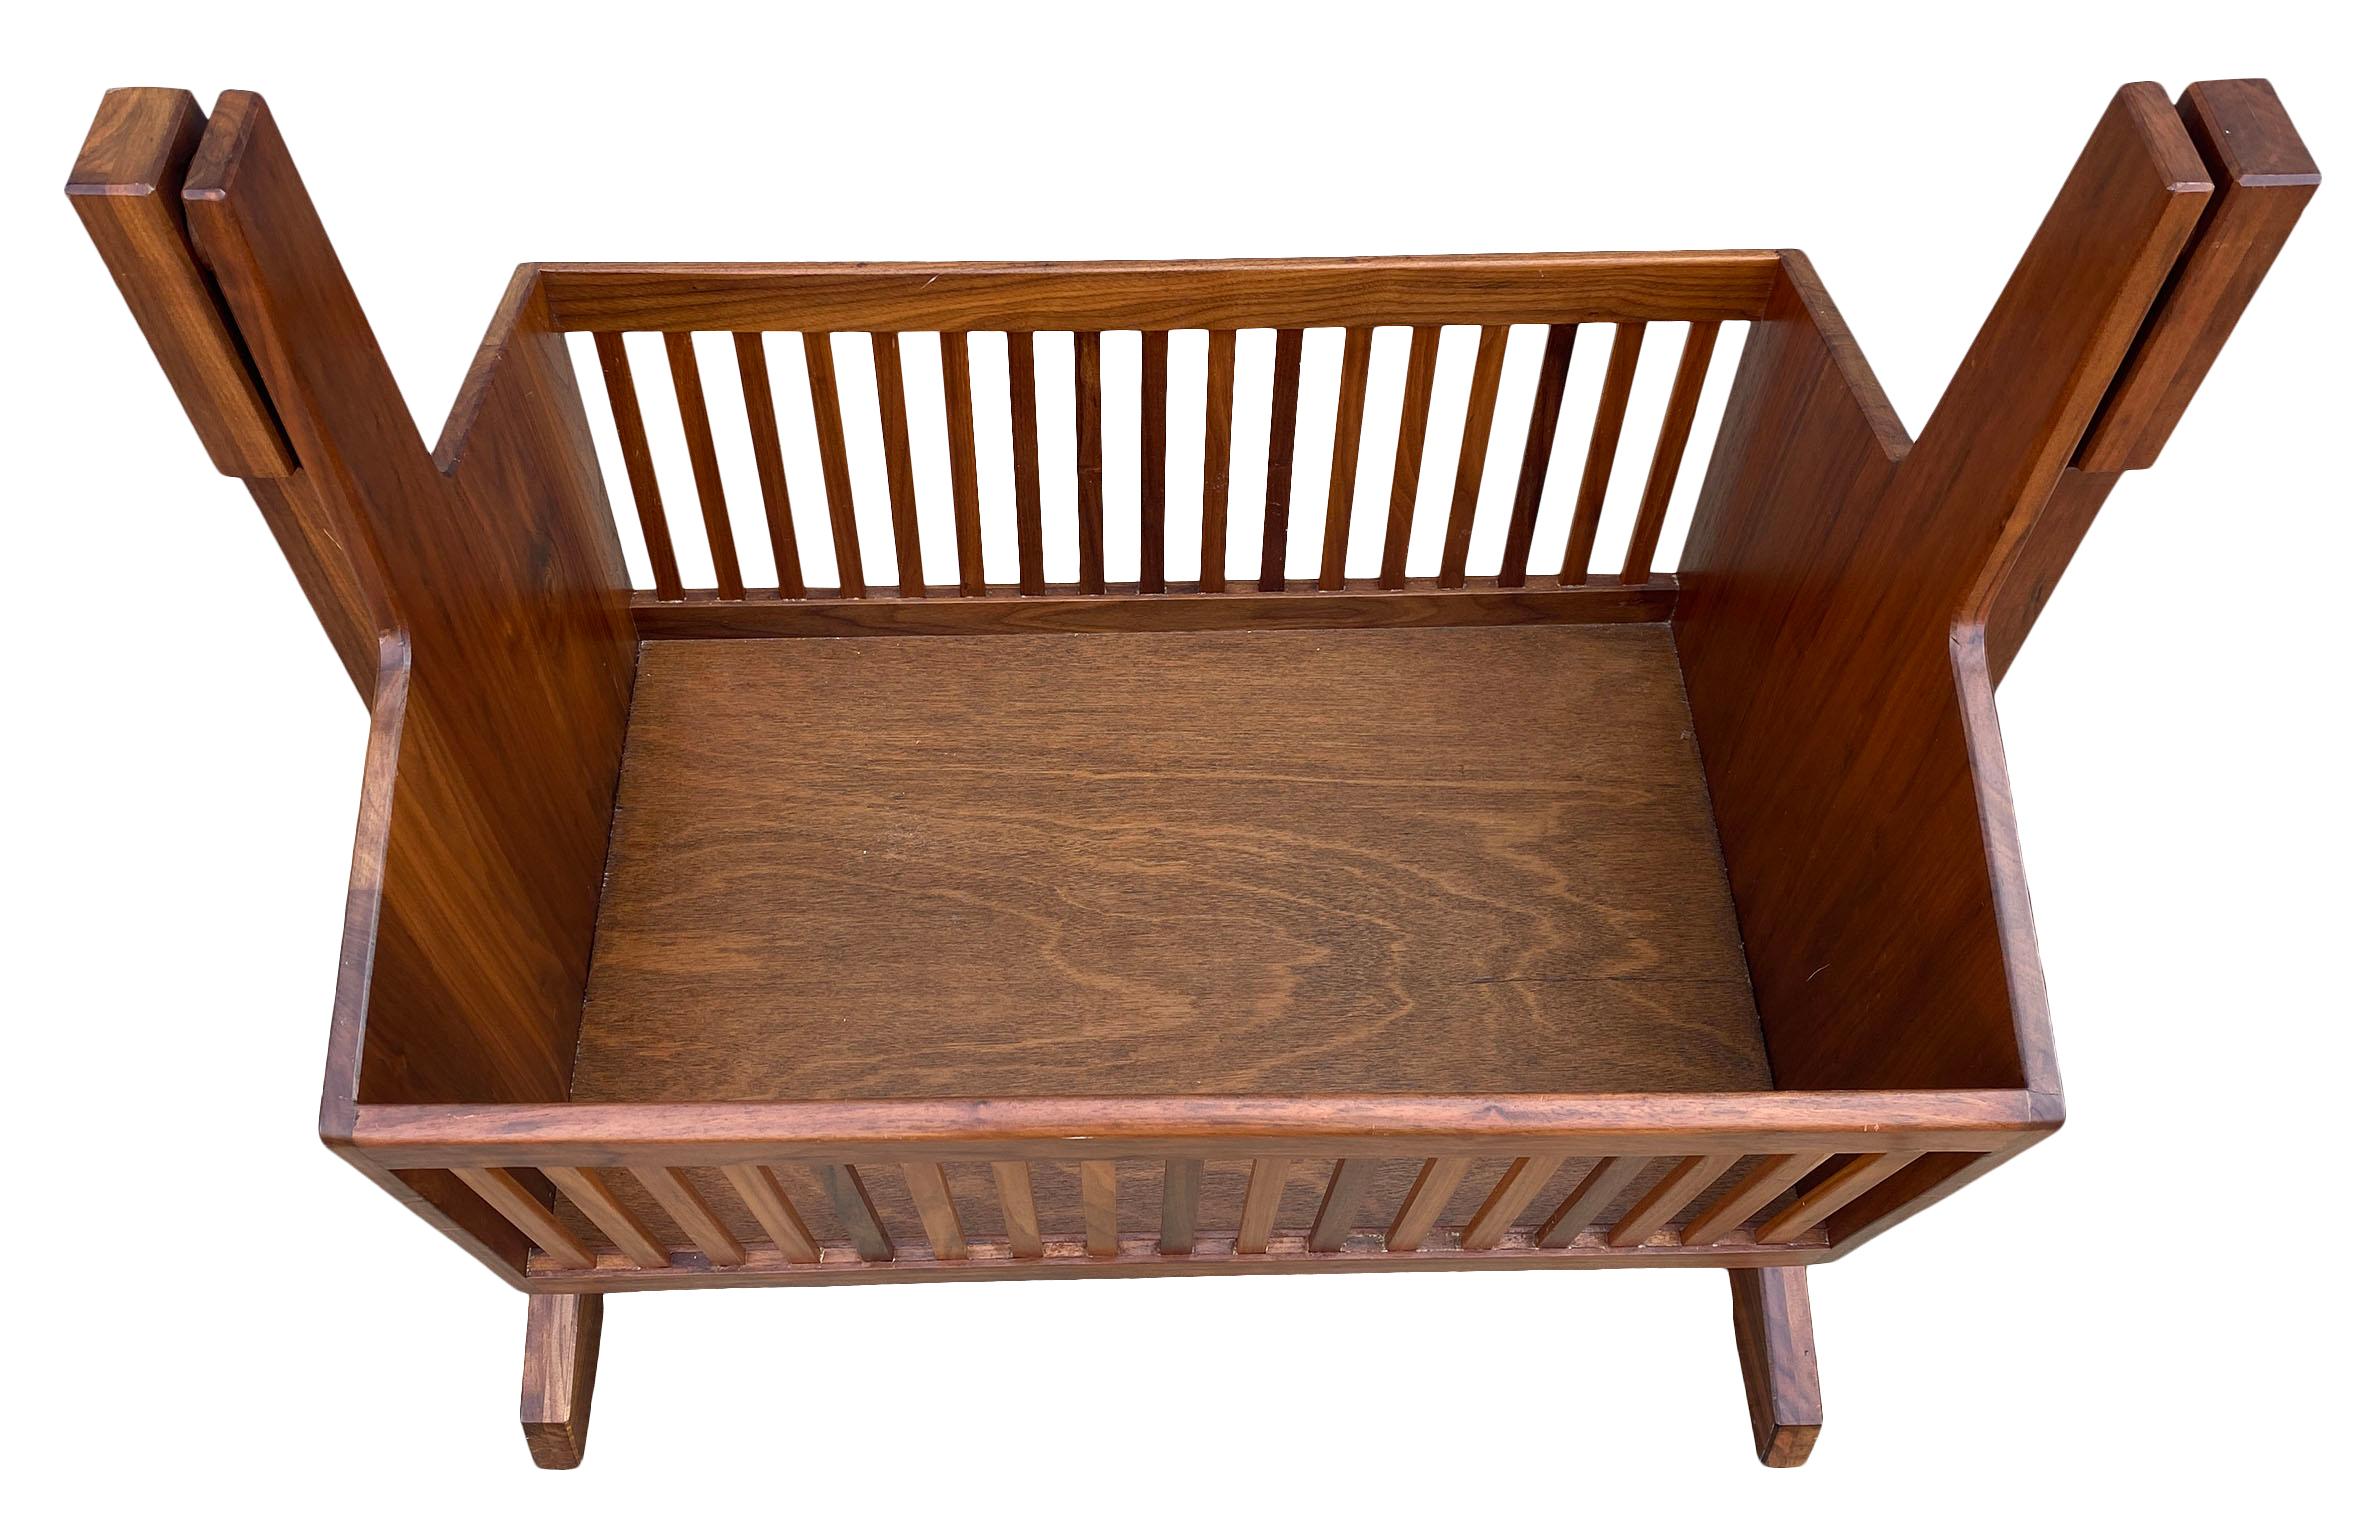 wooden bassinet